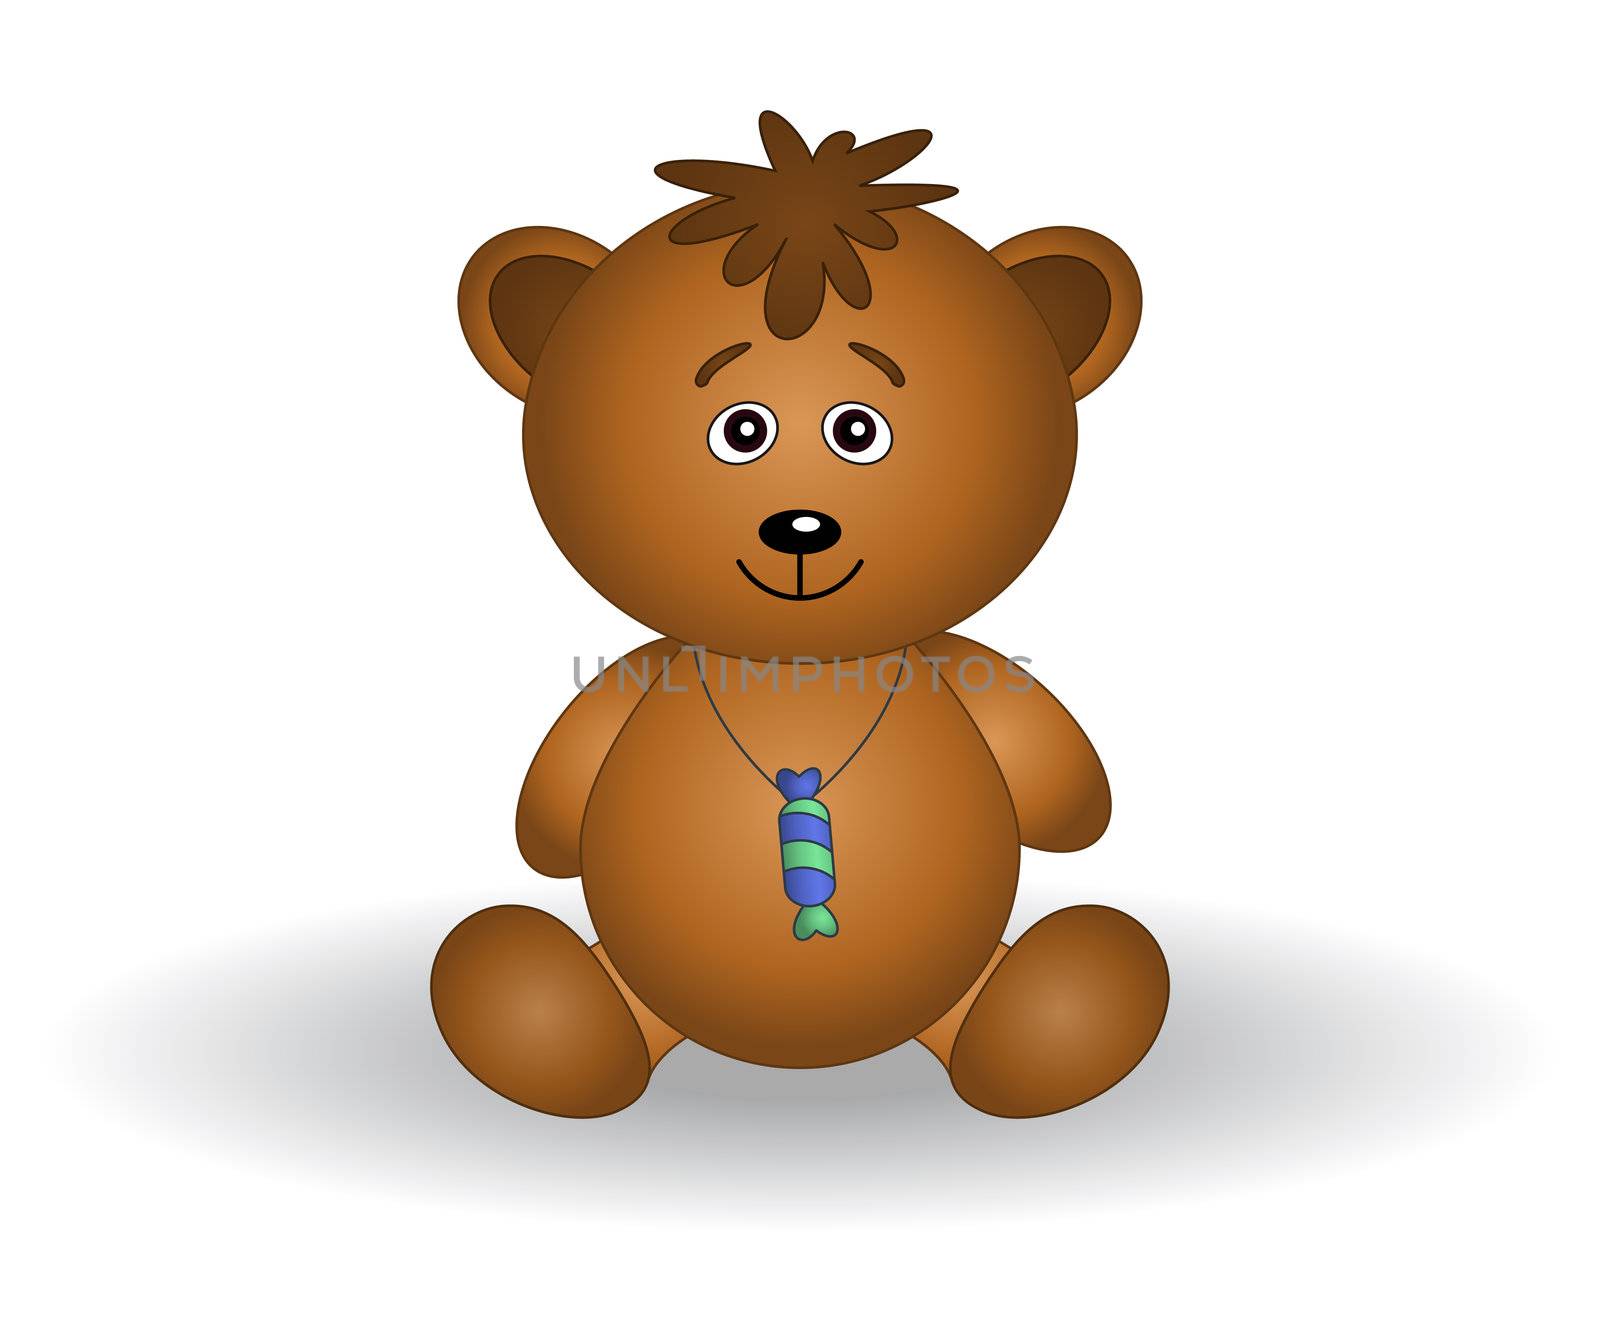 Teddy bear cub with a sweet by alexcoolok